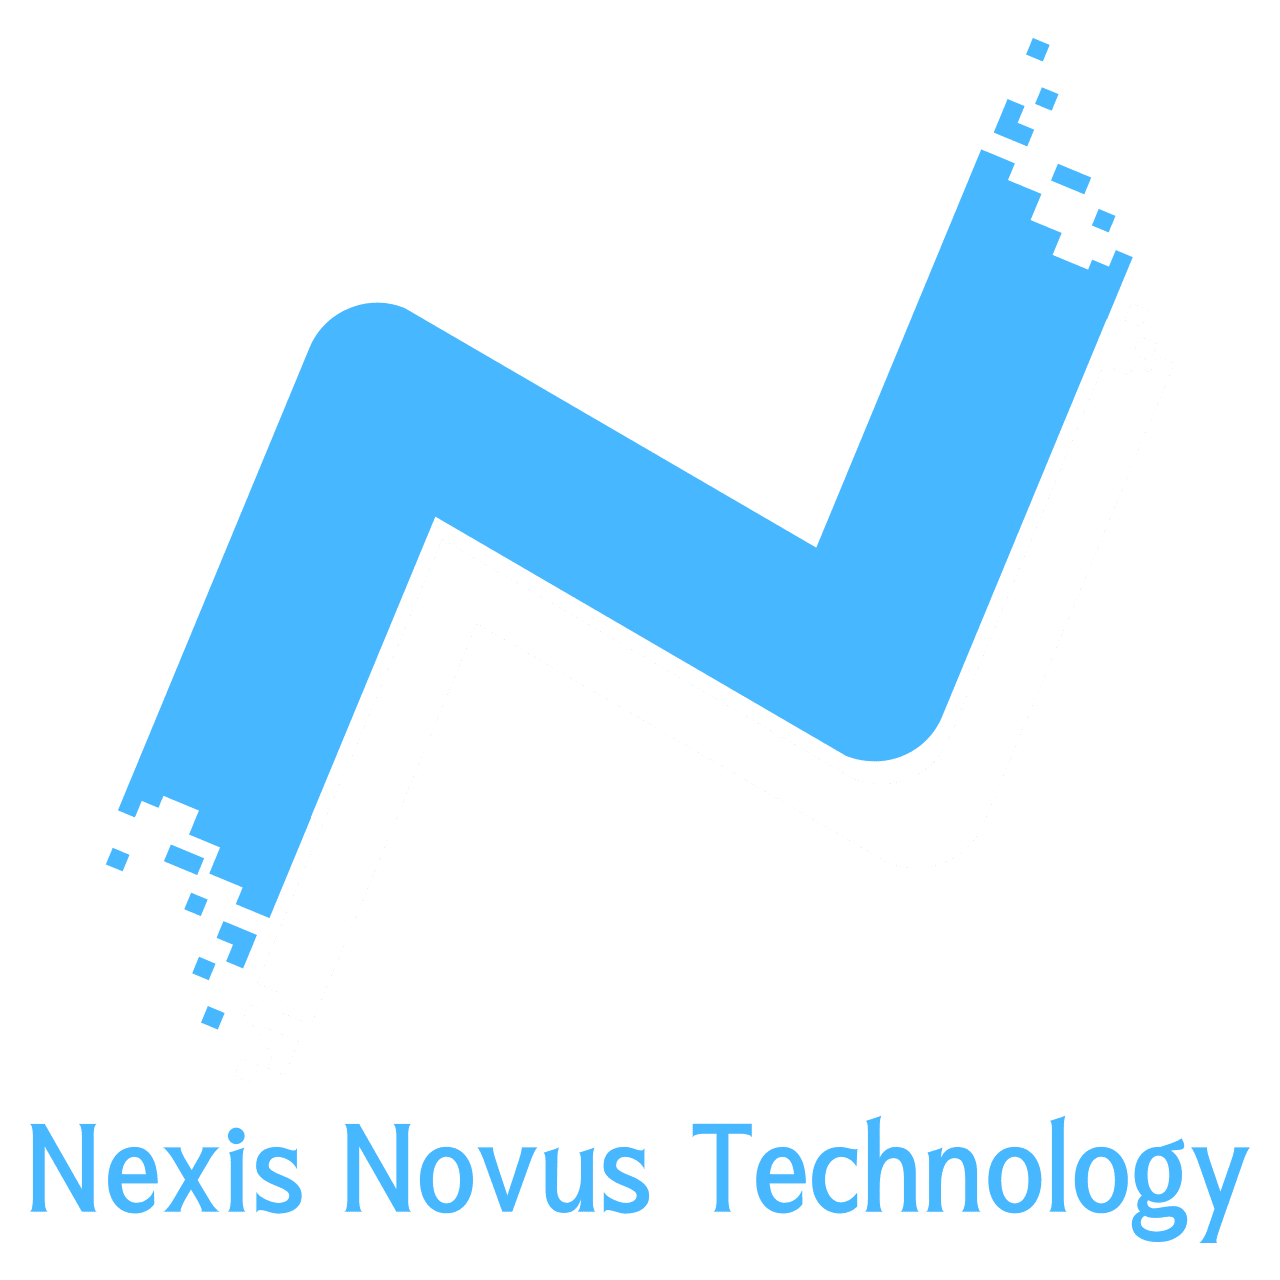 Nexis novus technology logo mobil size 300 x 300